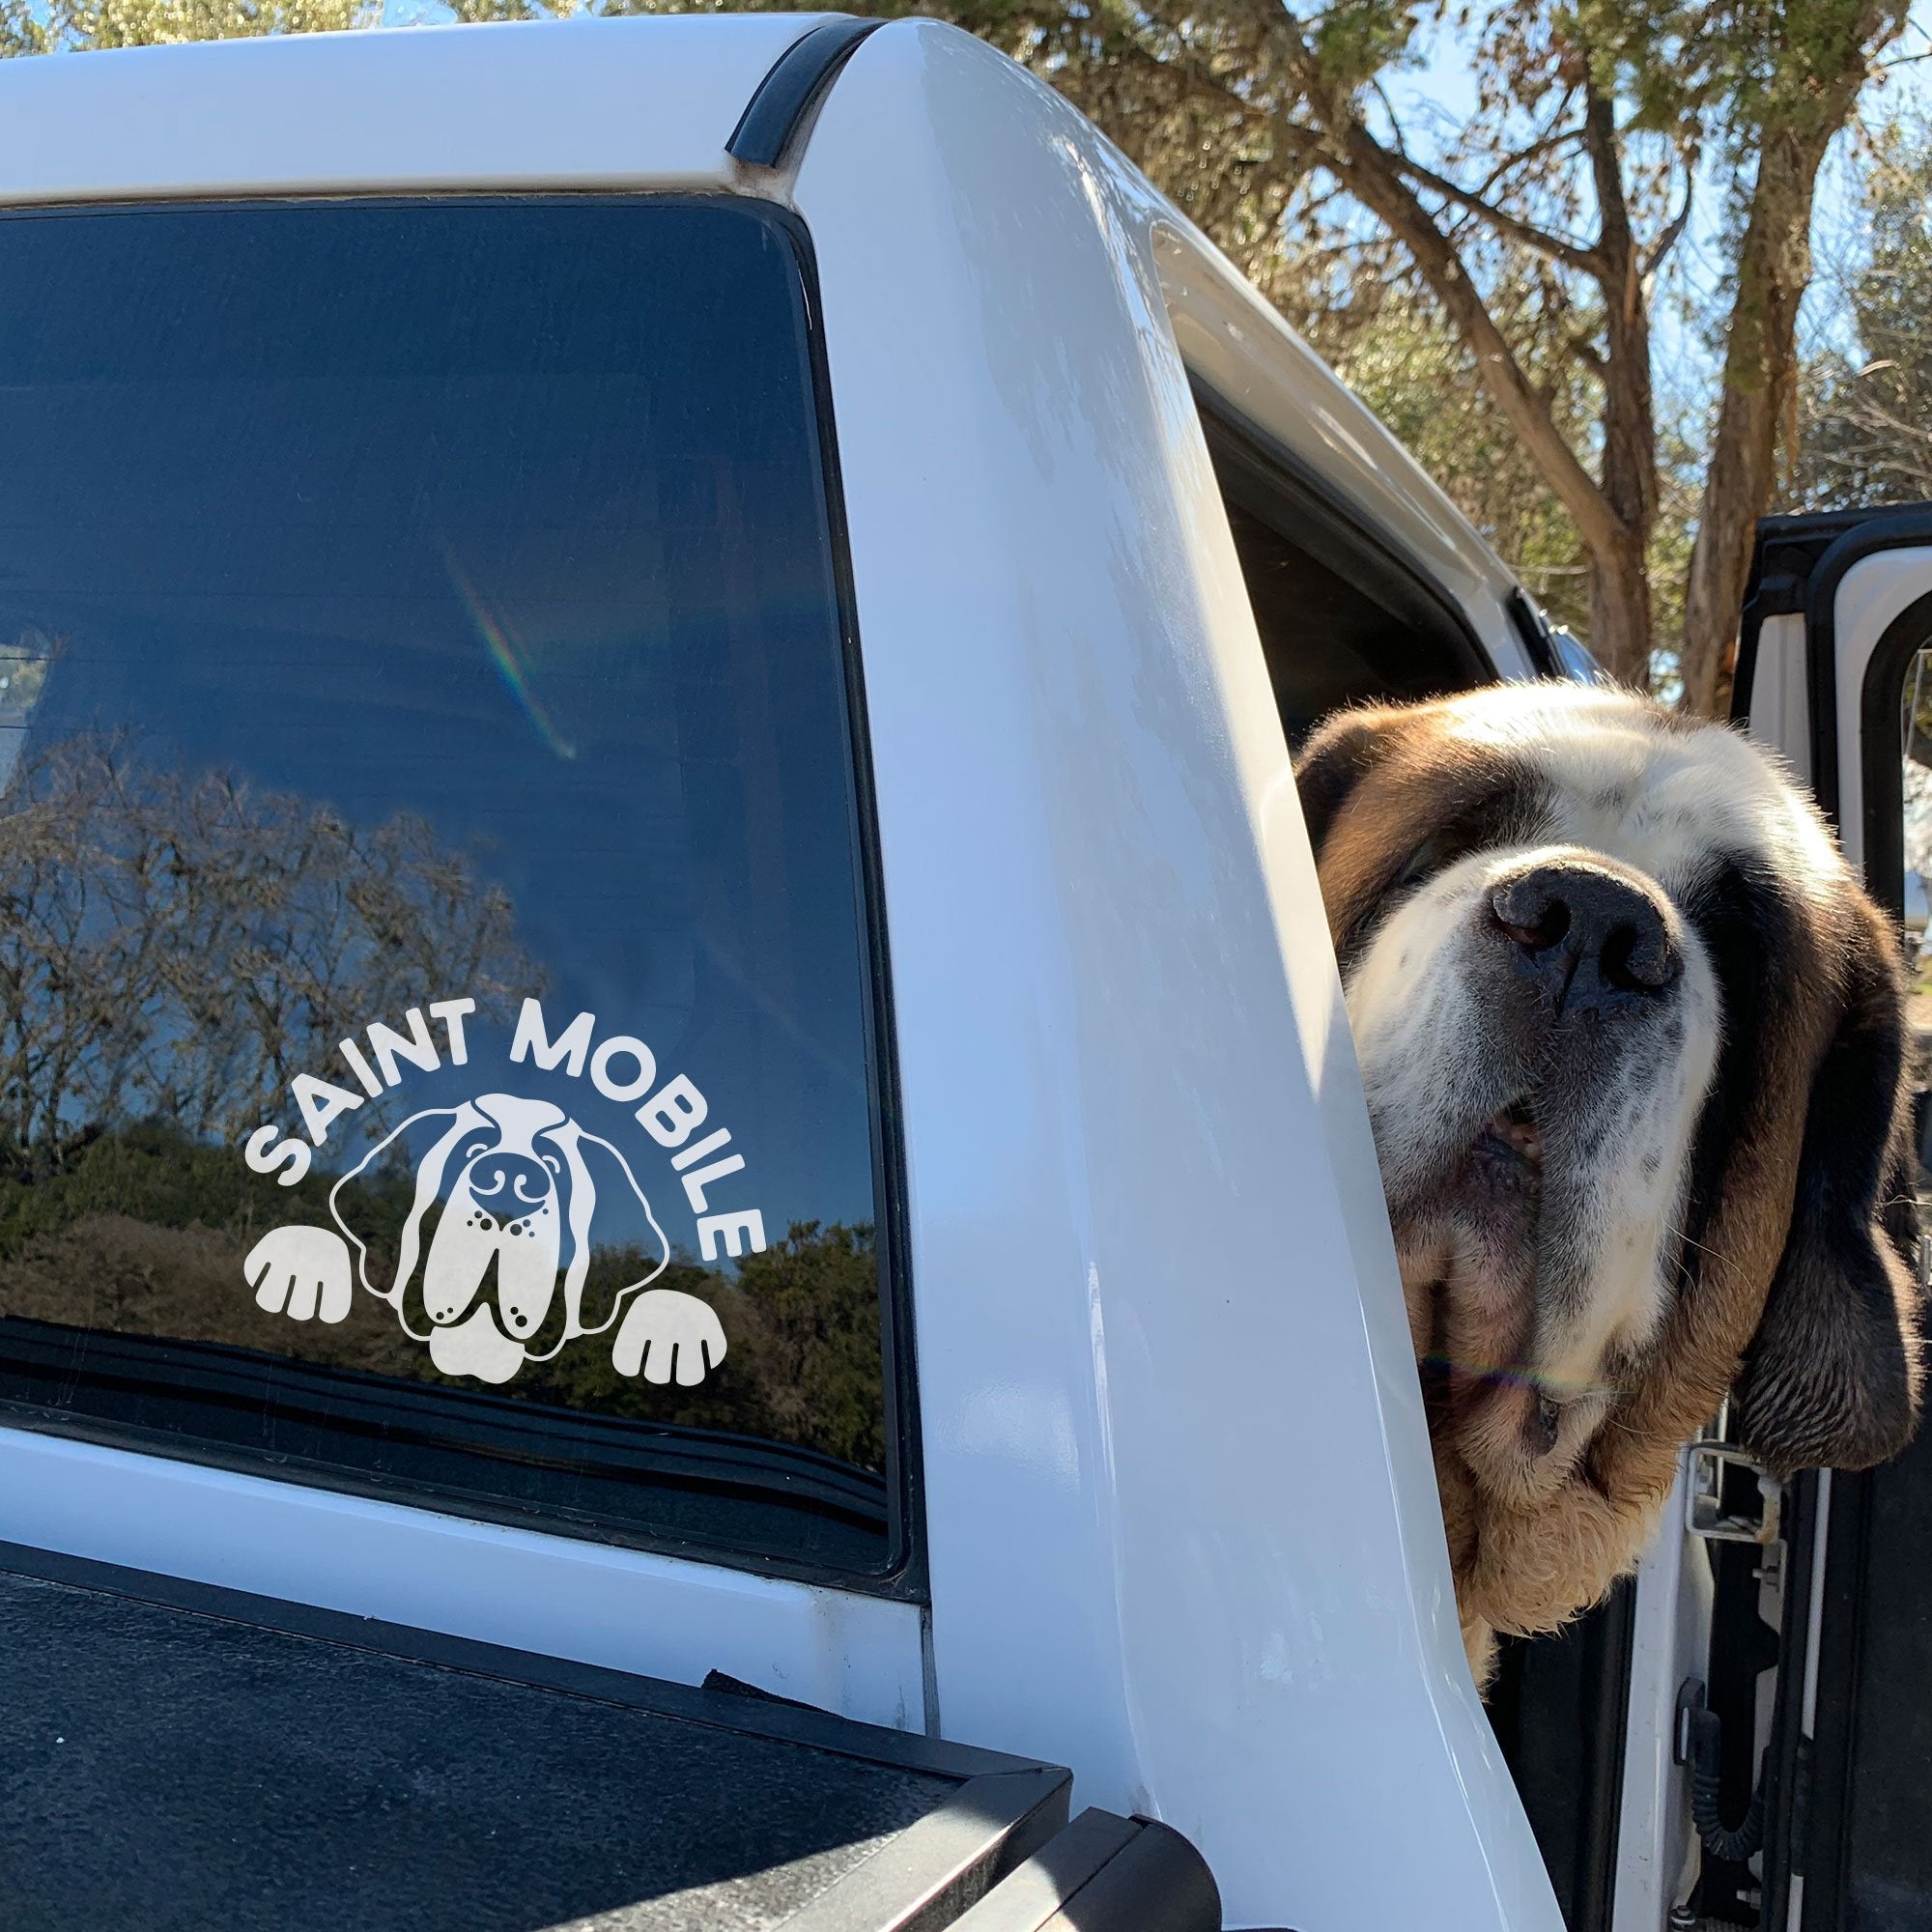 Saint Mobile St Bernard Dog Car Window Decal - Lucy + Norman